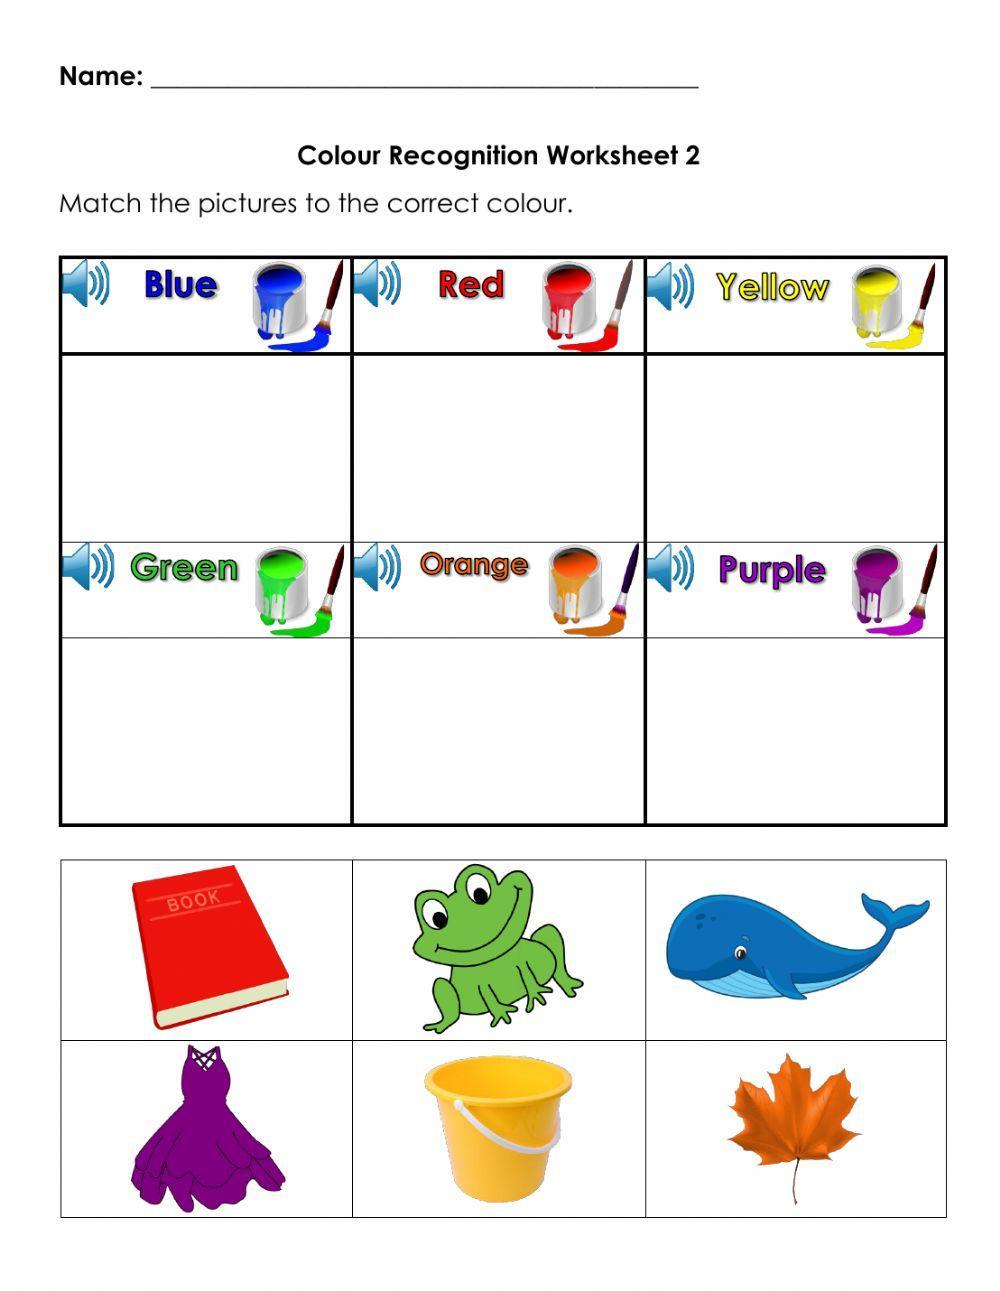 Colour Recognition Worksheet 2